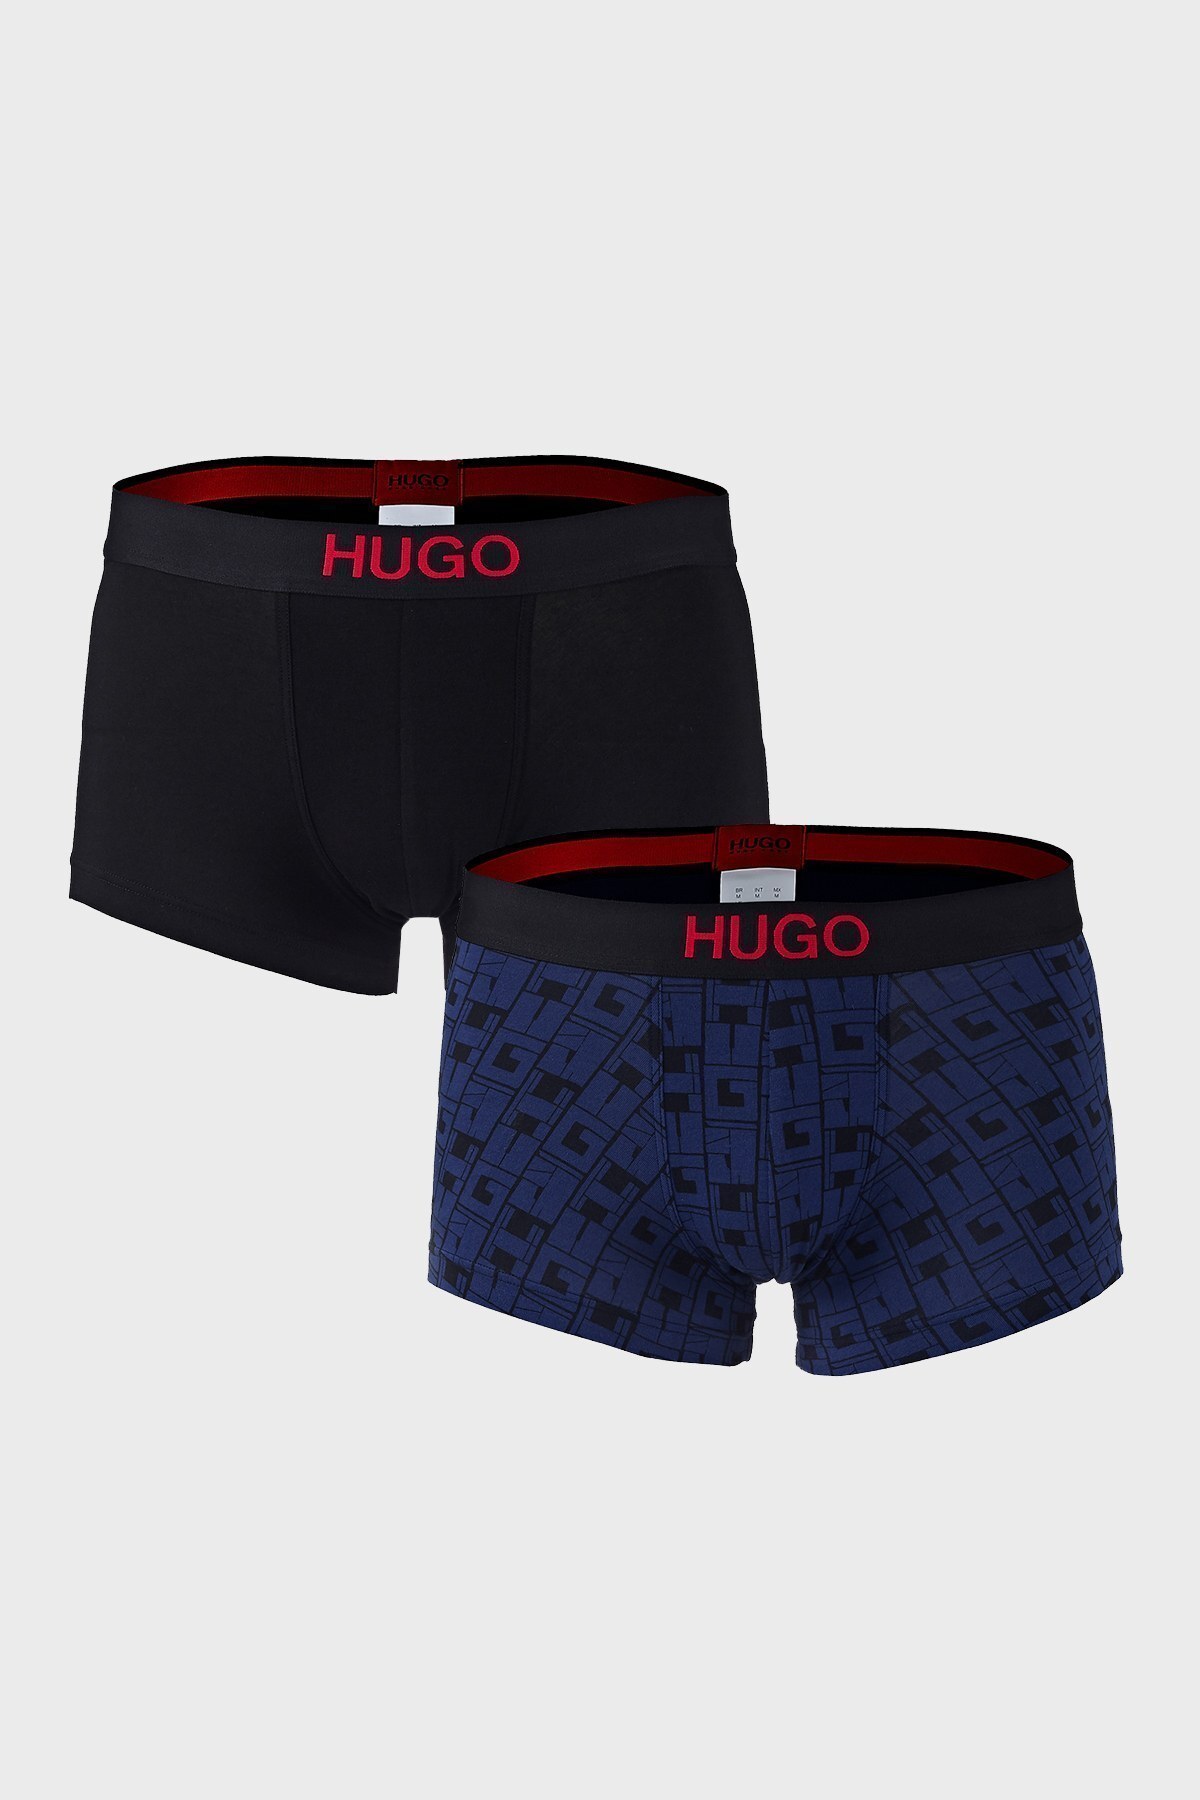 Hugo Boss Pamuklu Yumuşak Dokulu Esnek 2 Pack Erkek Boxer 50451416 430 SİYAH-LACİVERT